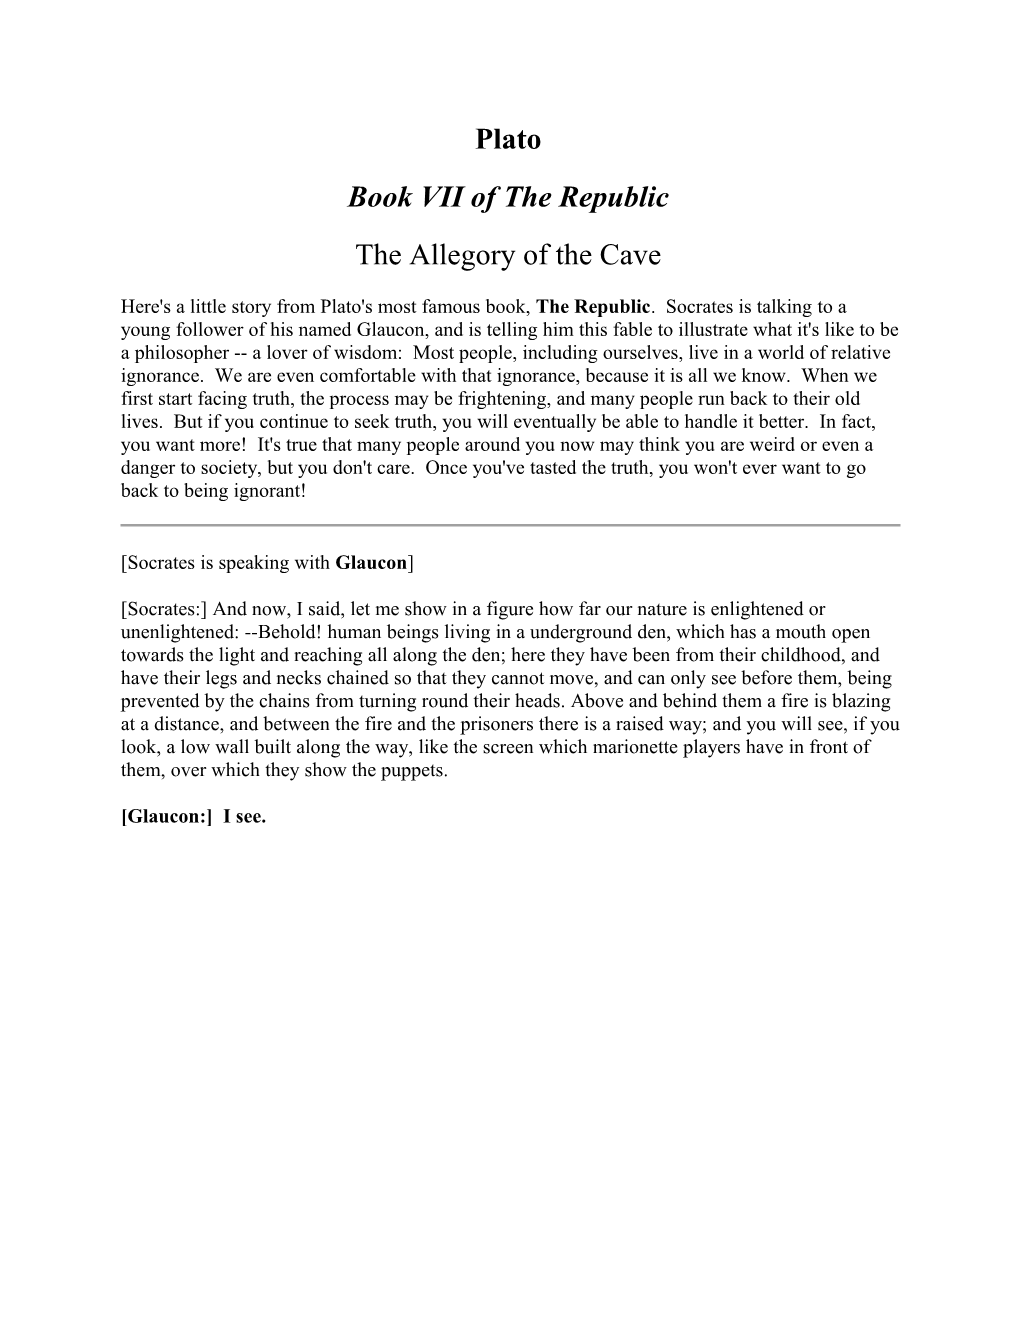 Book VII of the Republic